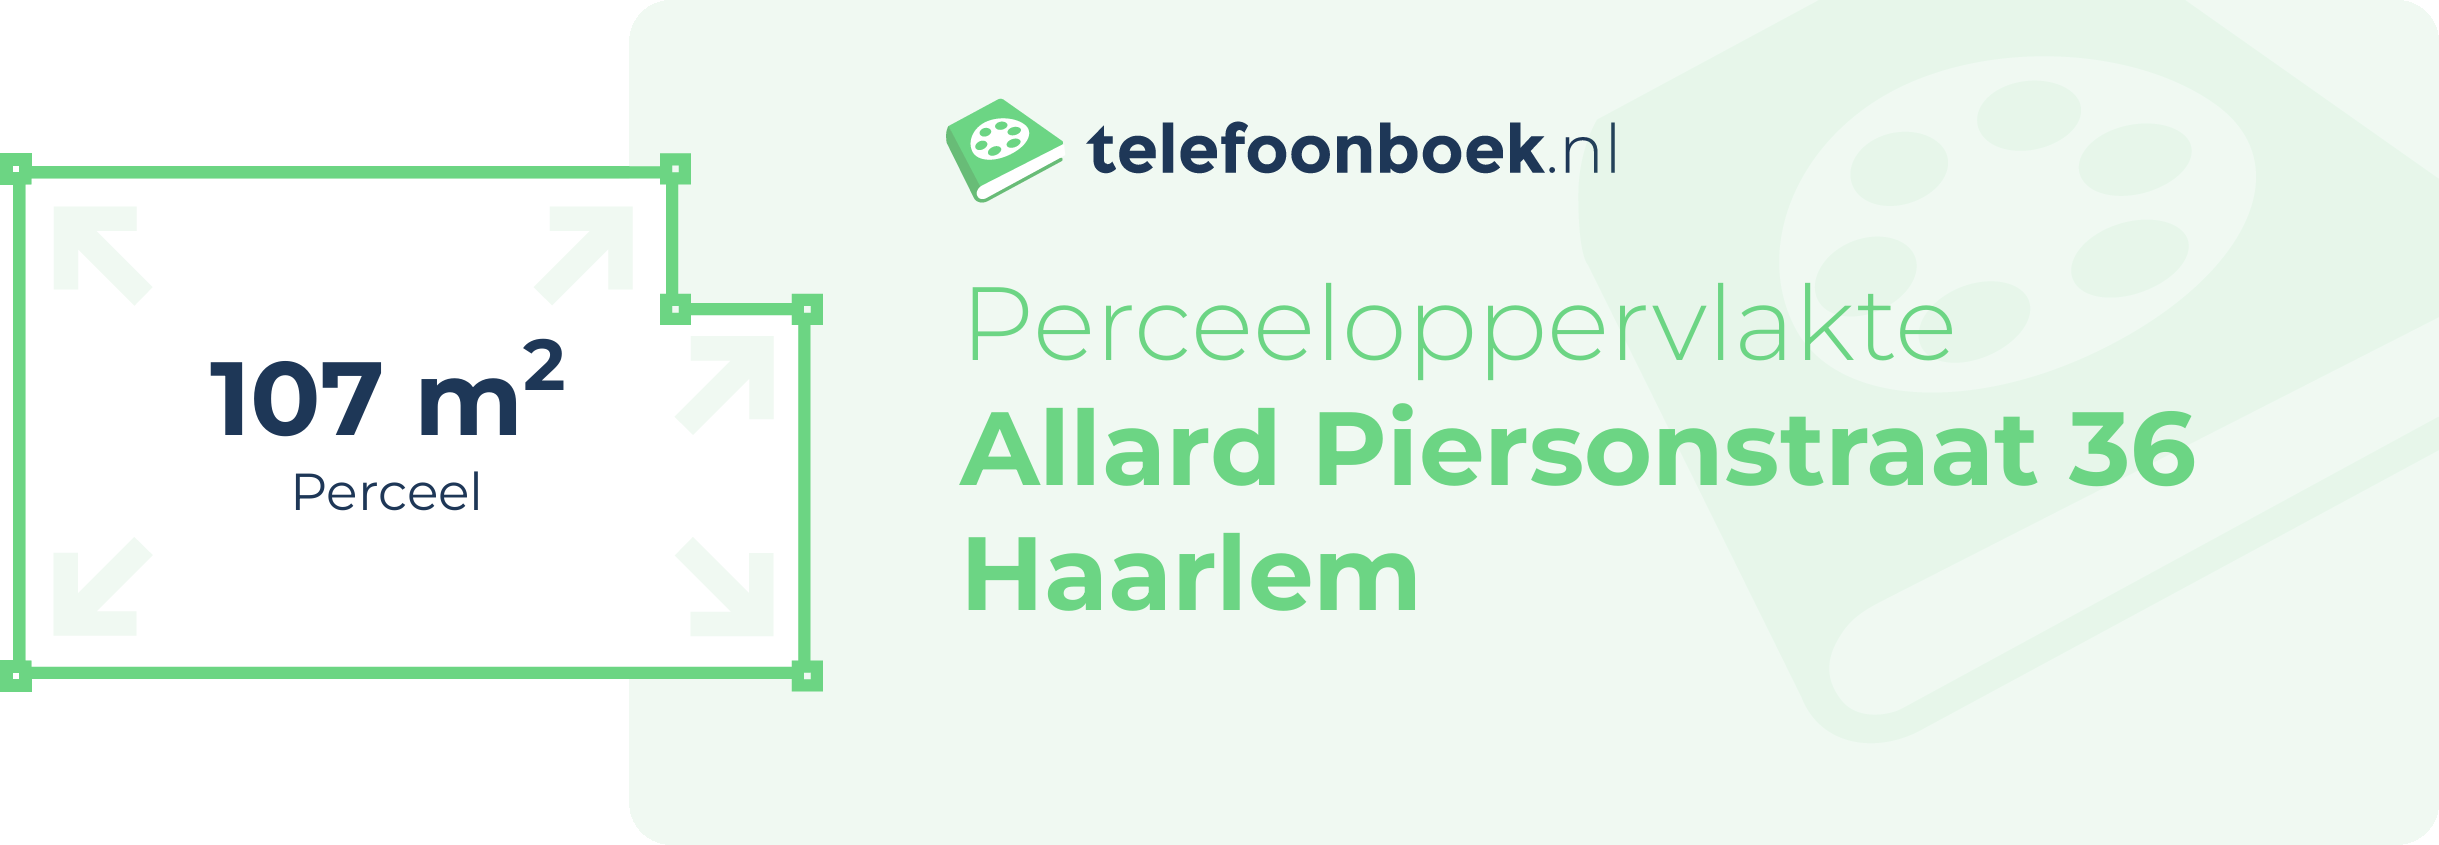 Perceeloppervlakte Allard Piersonstraat 36 Haarlem